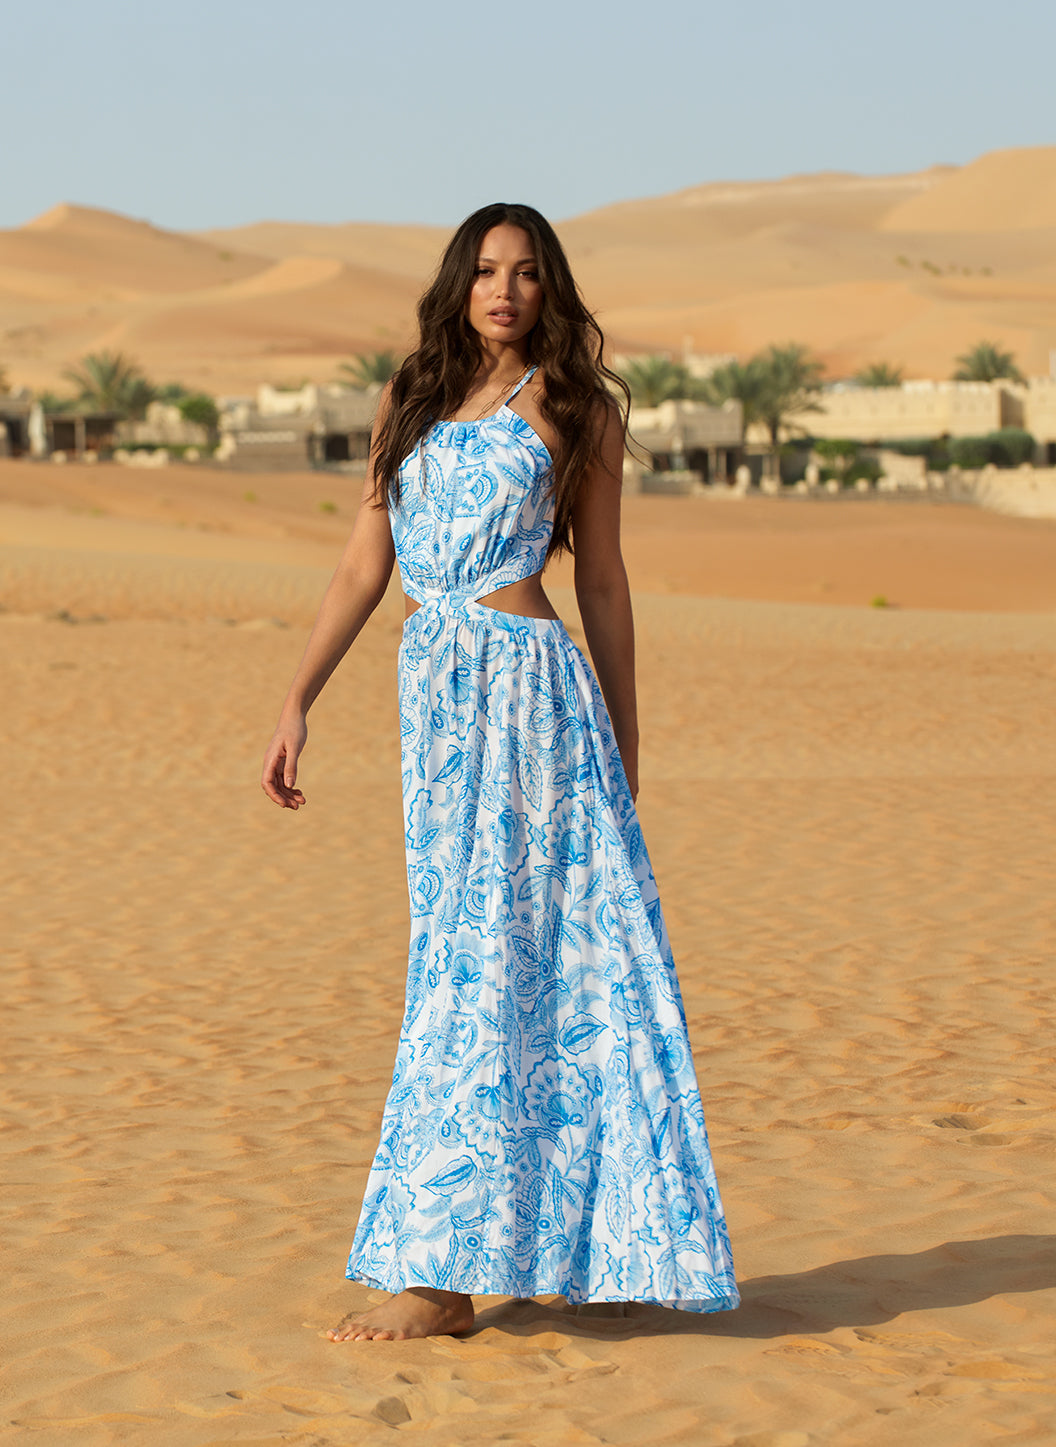 Arabella_Ceramic_Dress_Lifestyle